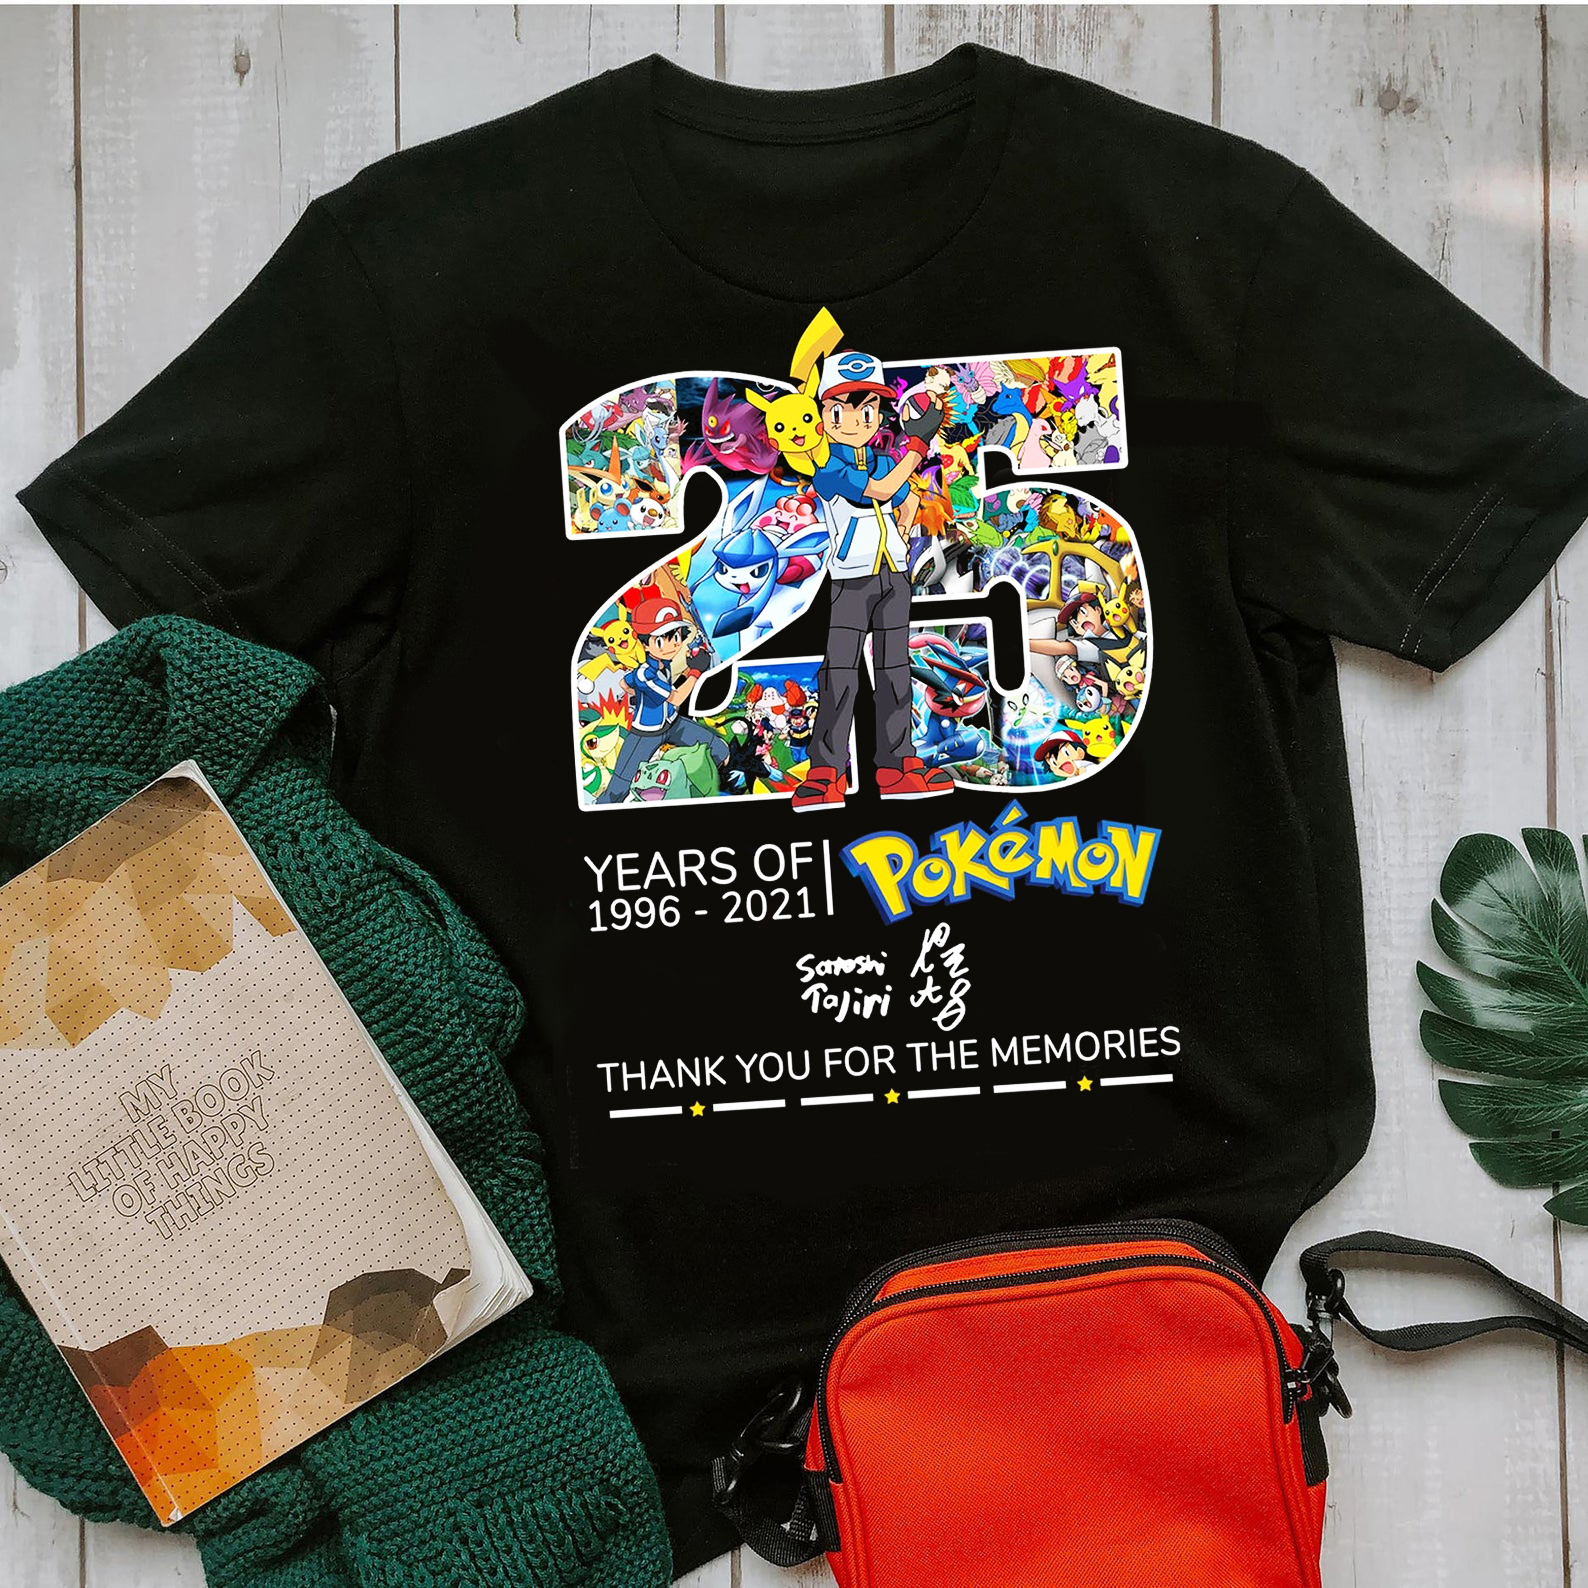 Pokemon Game Lover T Shirt, 25th Anniversary T Shirt, Pikachu And Ash Ketchum T Shirt, Japanese Game Shirt, Gamer T Shirt